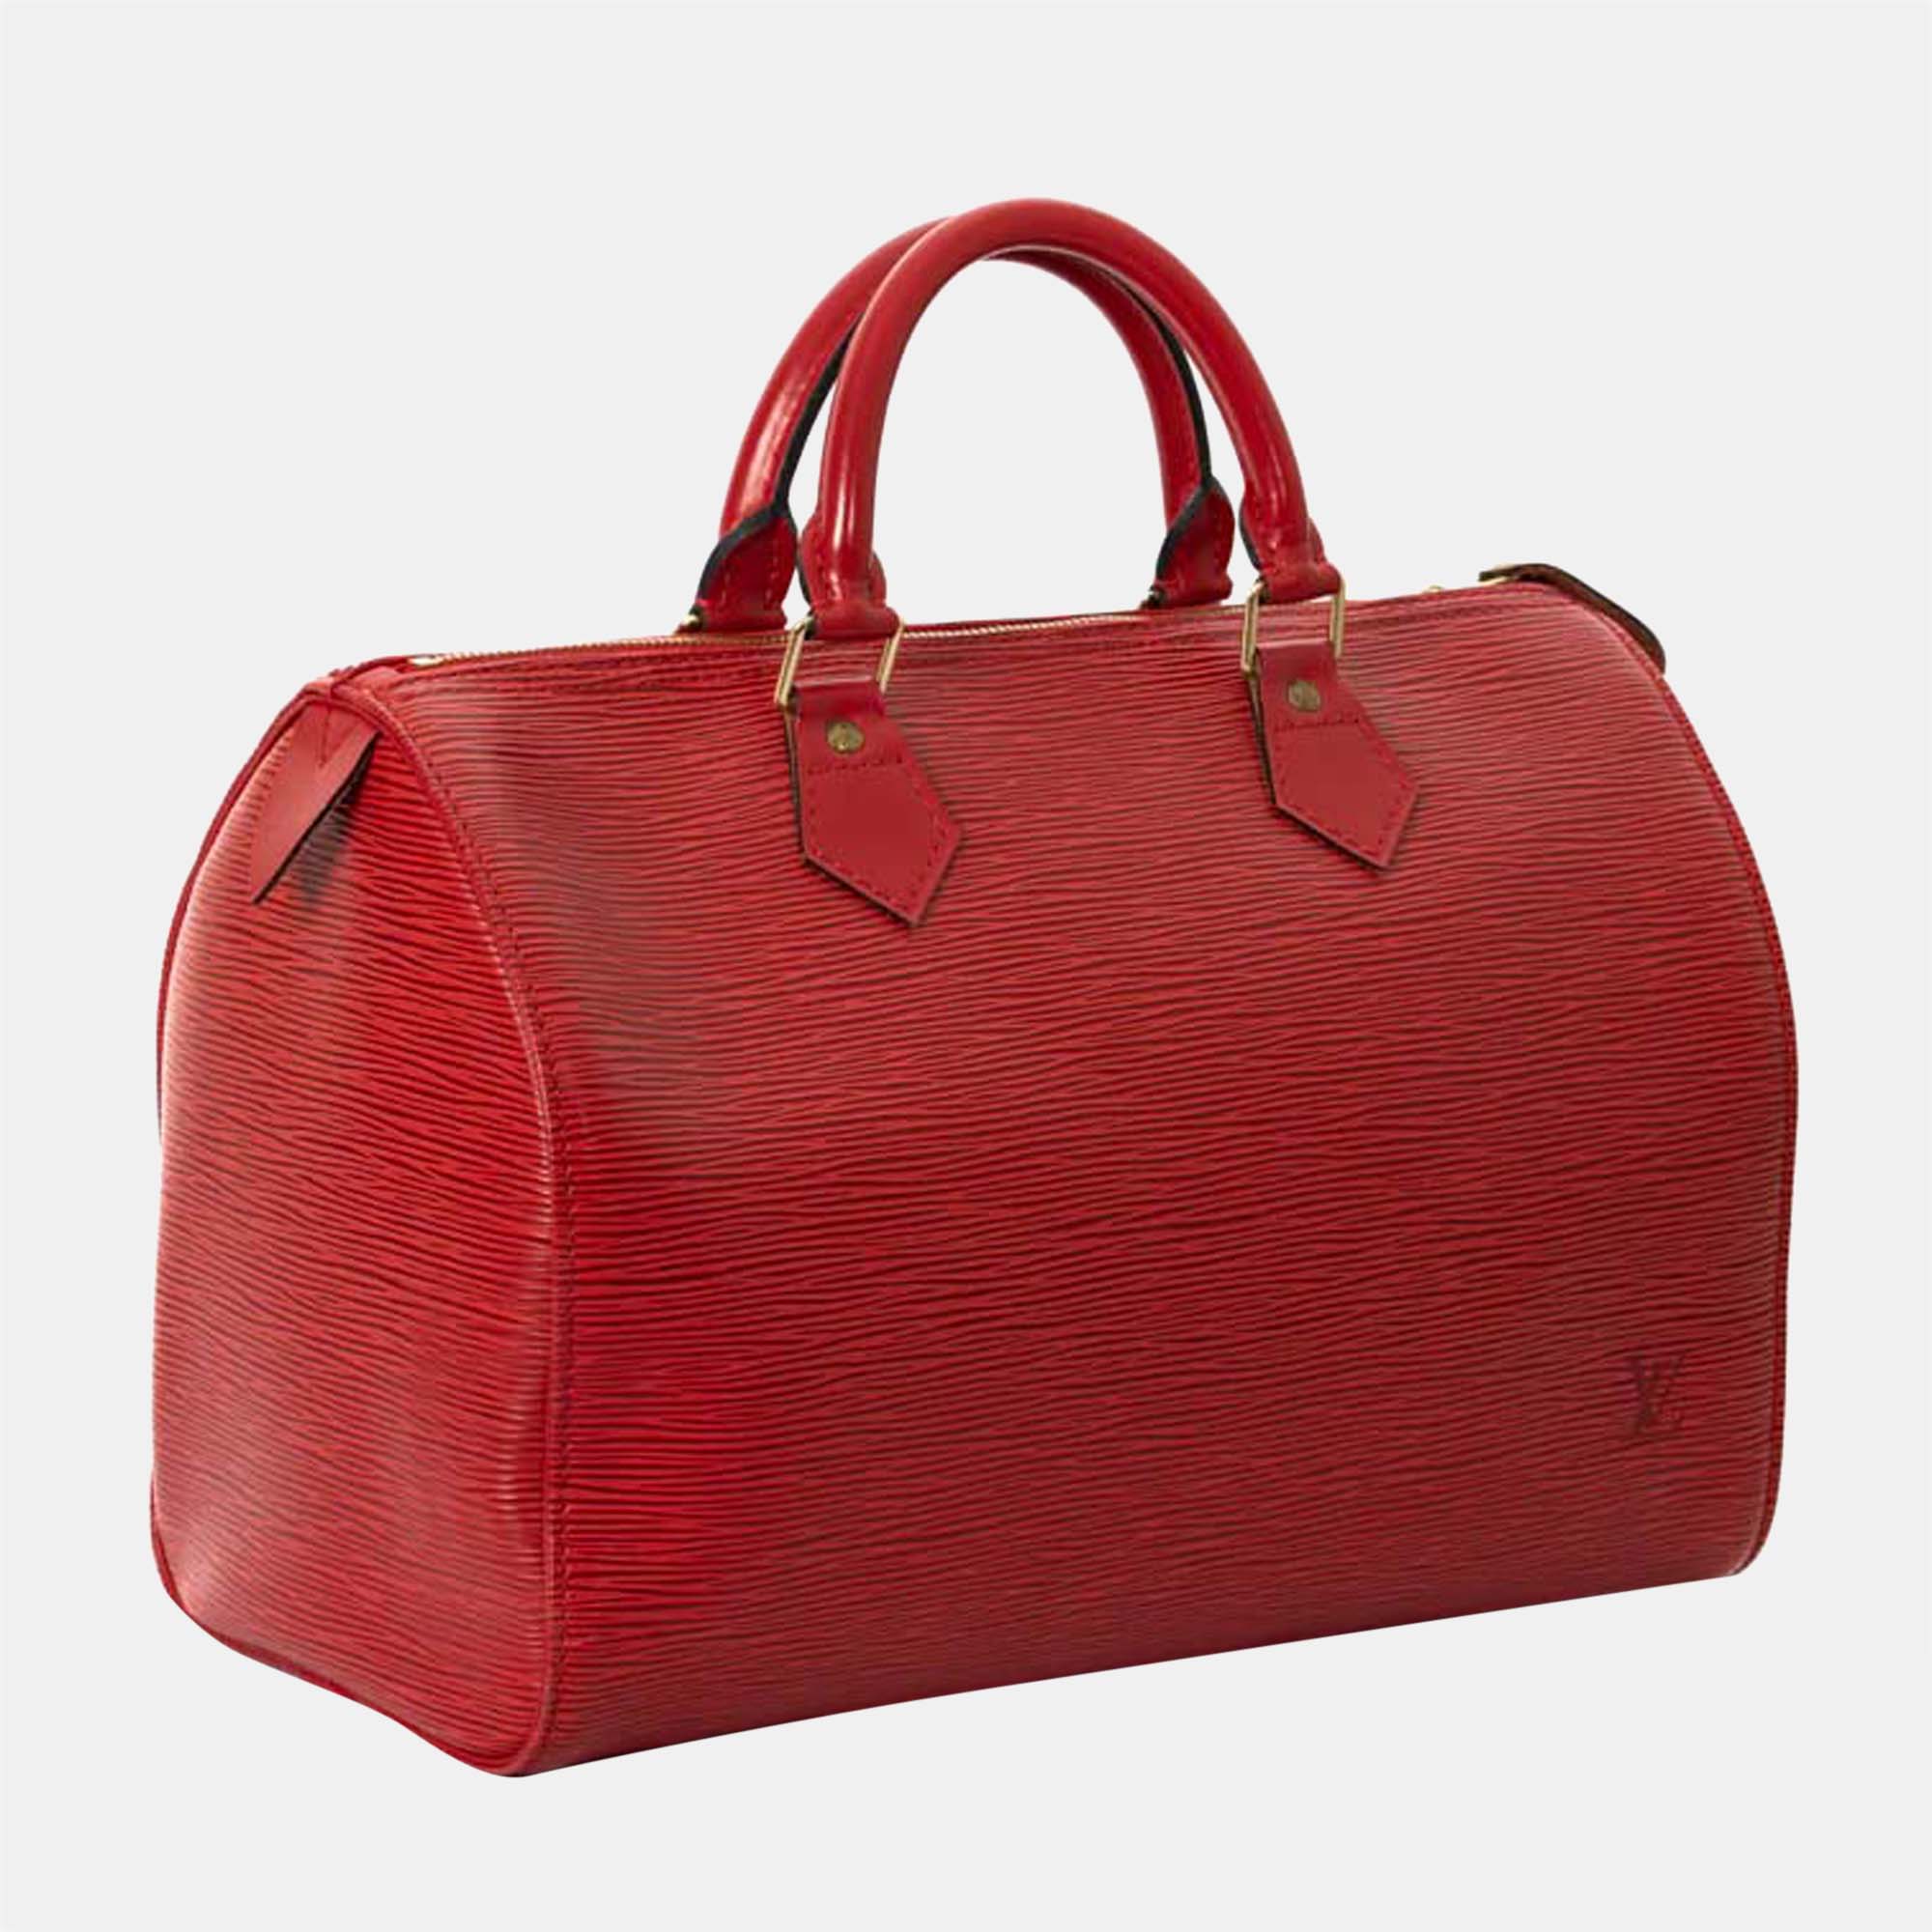 

Louis Vuitton Speedy Epi Handbag in Red Epi Leather